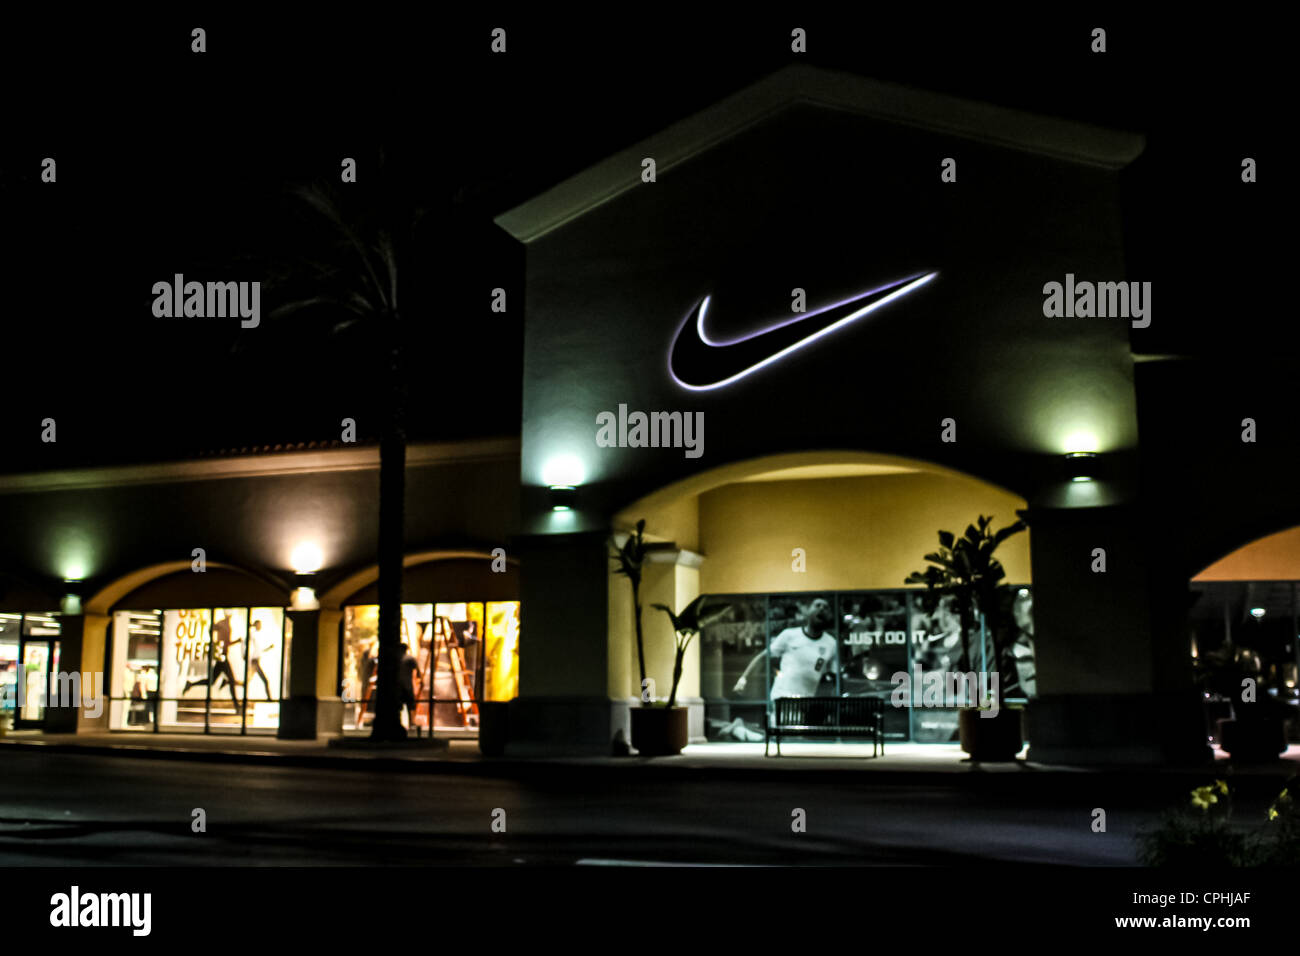 Nike outlet store -Fotos und -Bildmaterial in hoher Auflösung – Alamy